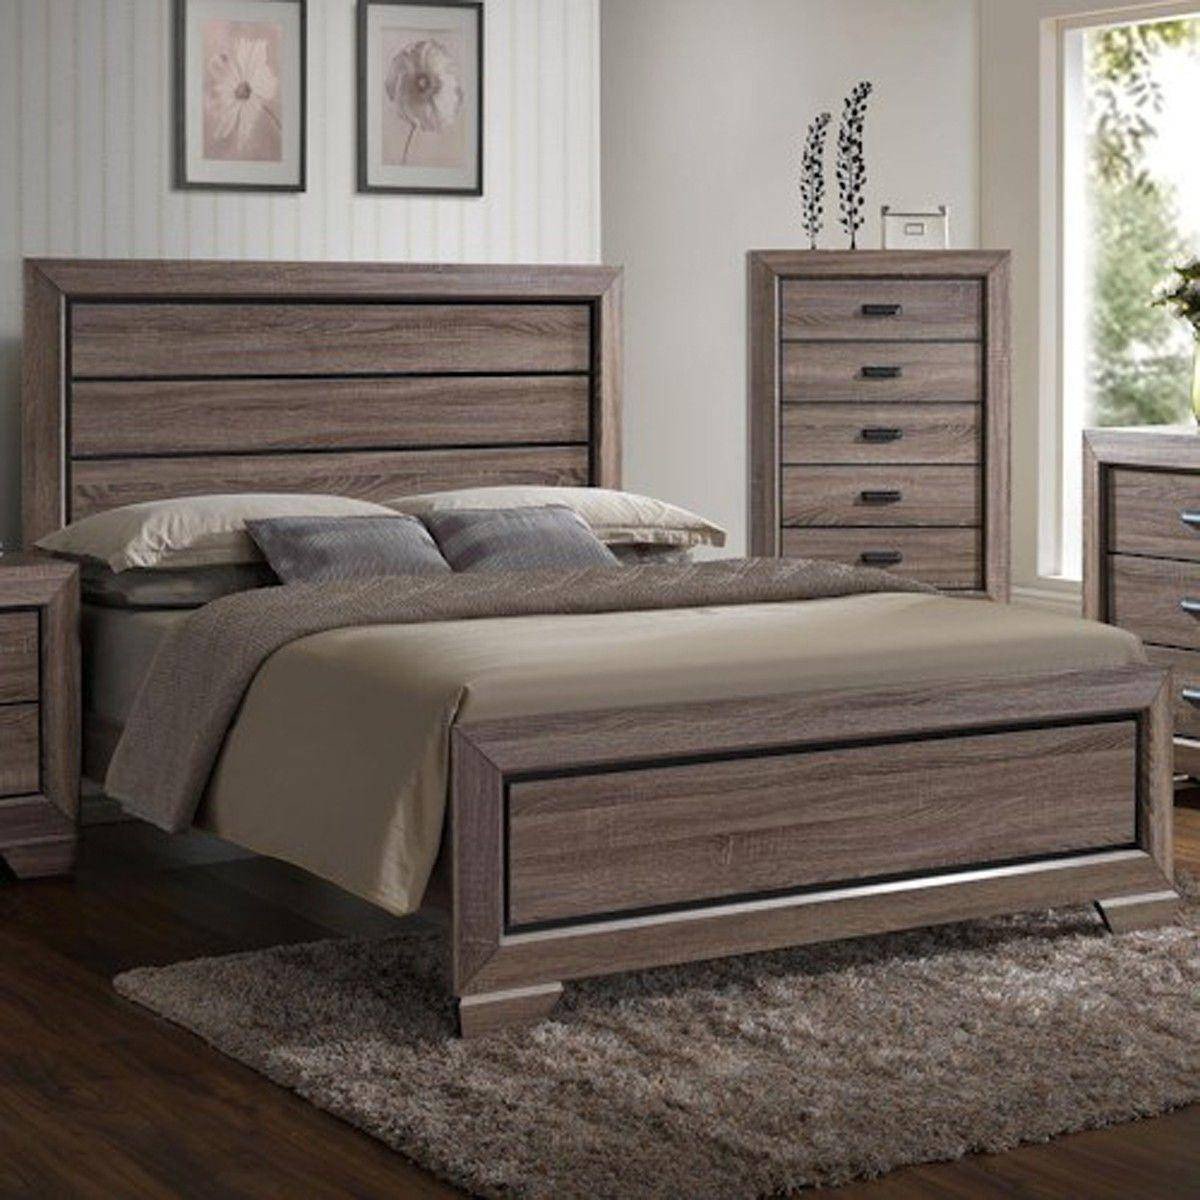 Solid Oak Bedroom Set Luxury Crown Mark B5500 Farrow Grey Brown Finish solid Wood Queen